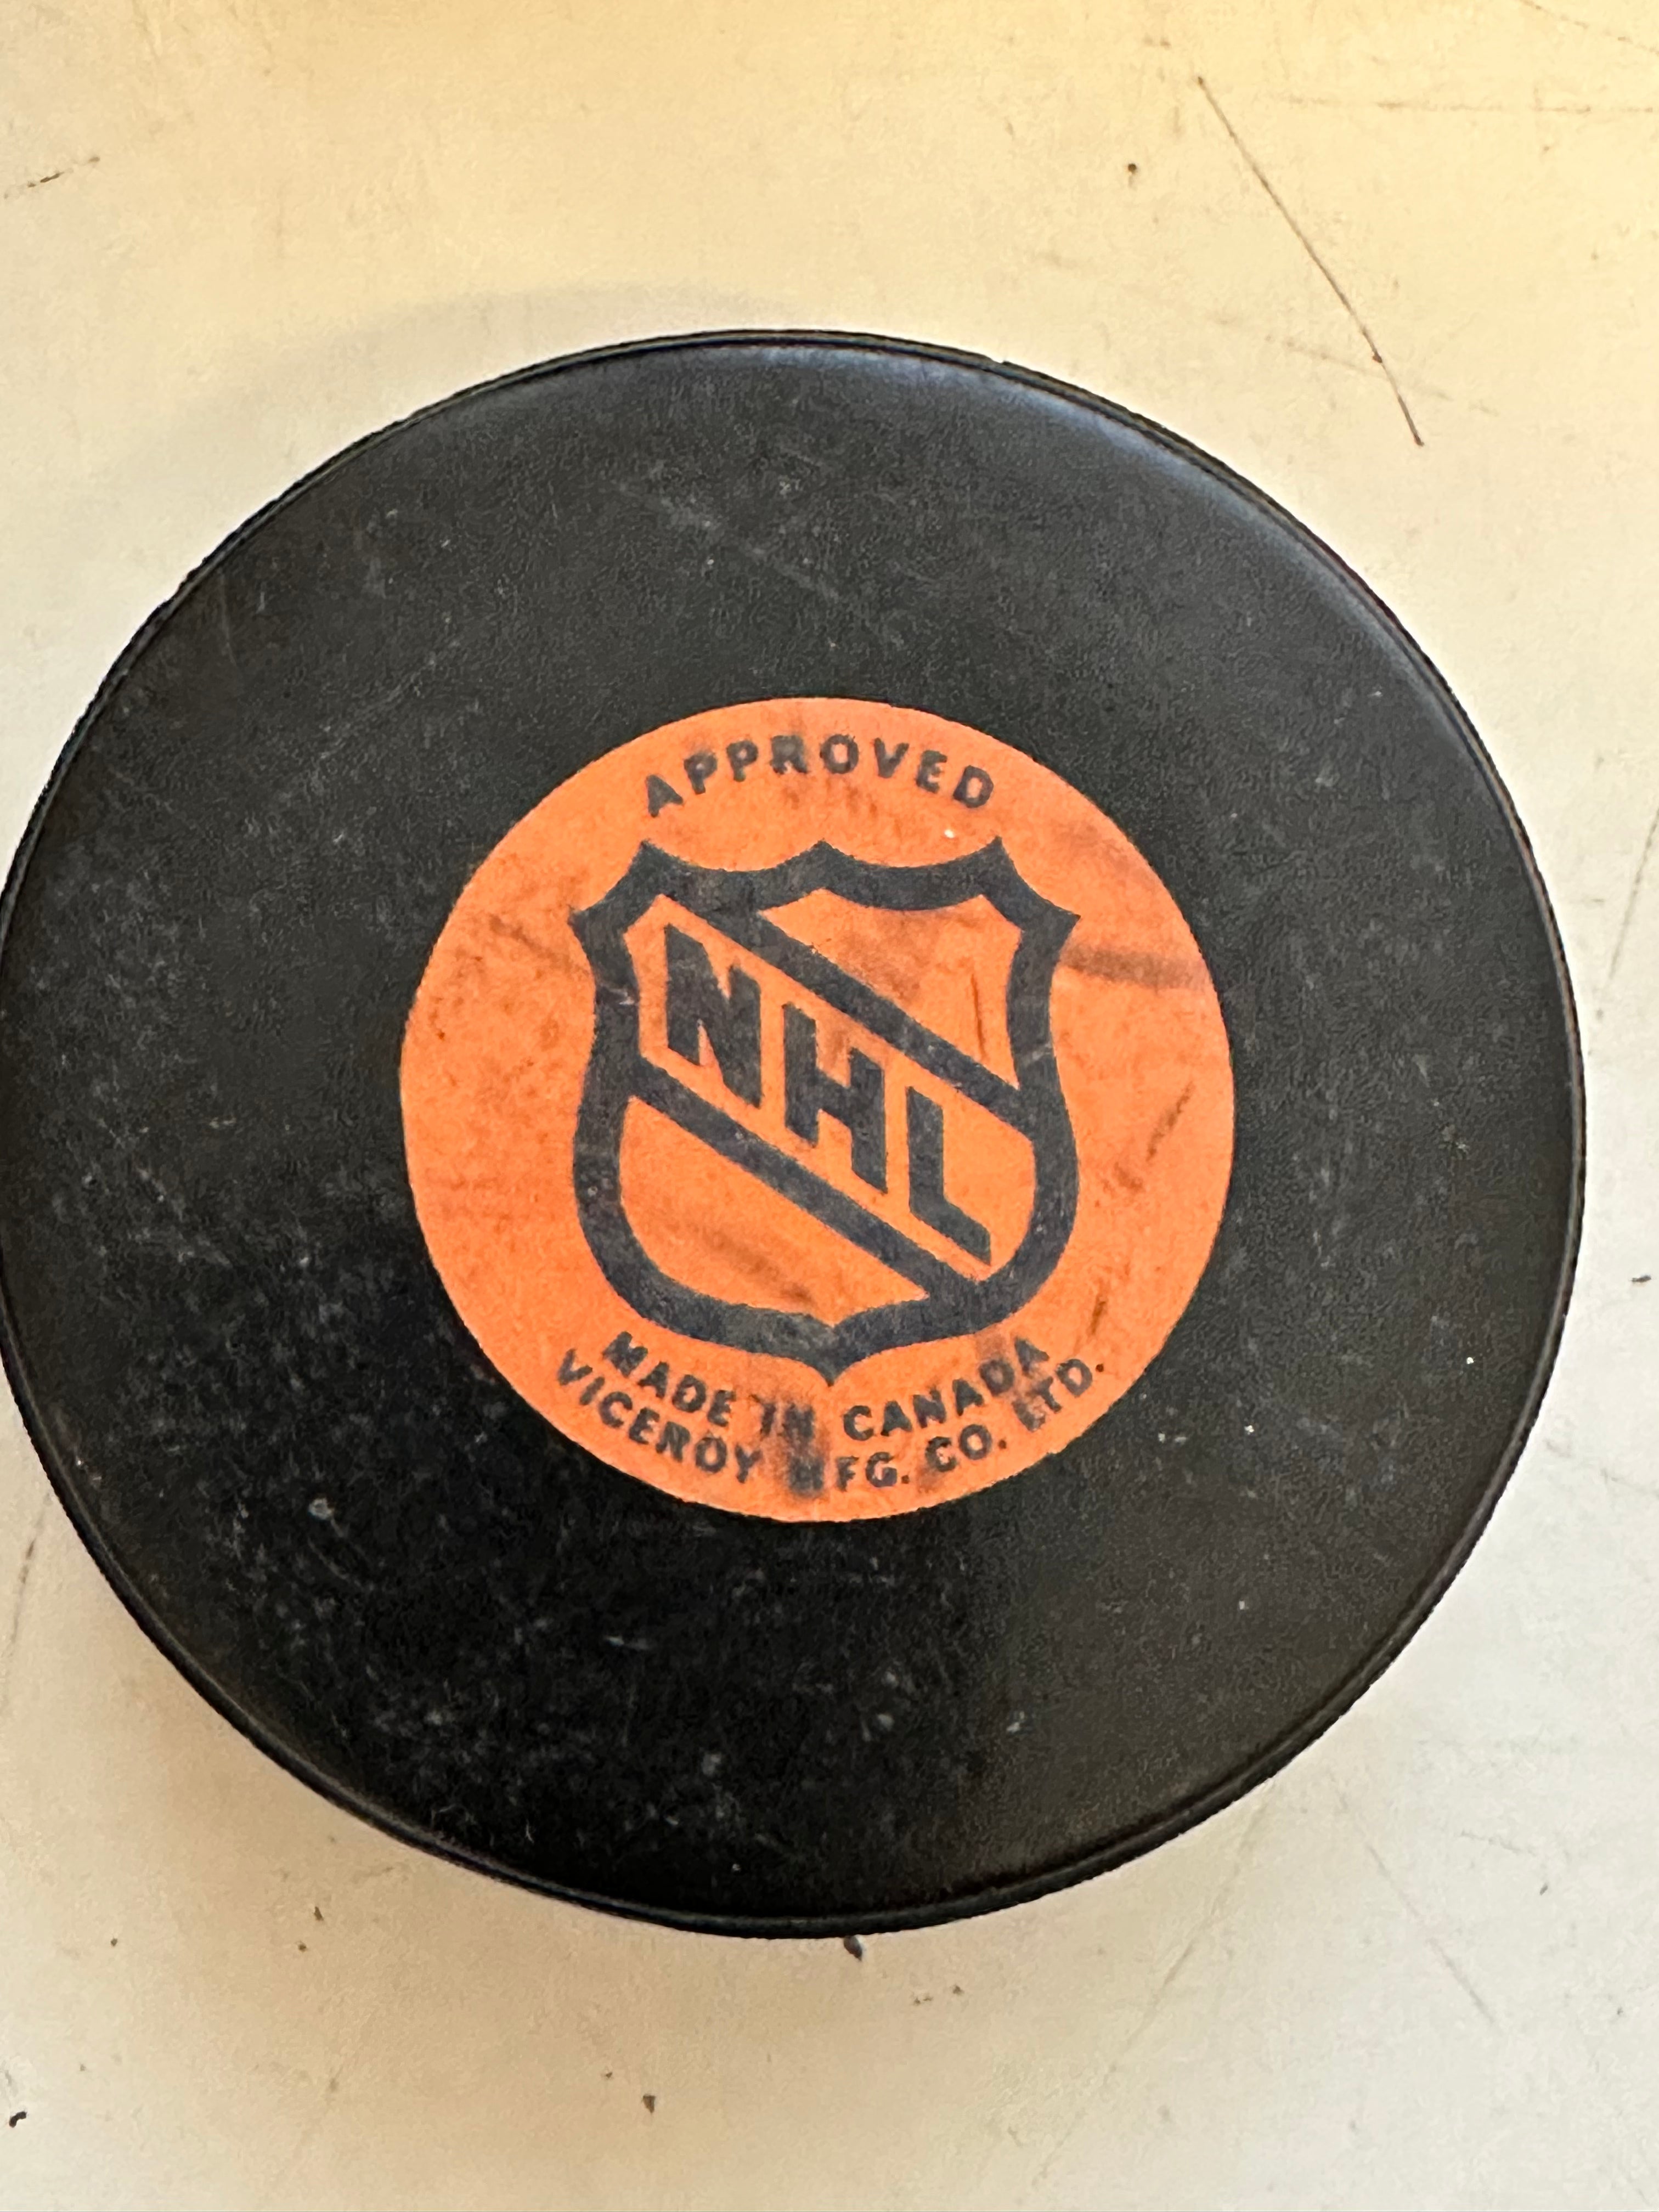 Toronto Maple Leafs vintage Viceroy hockey puck 1970s